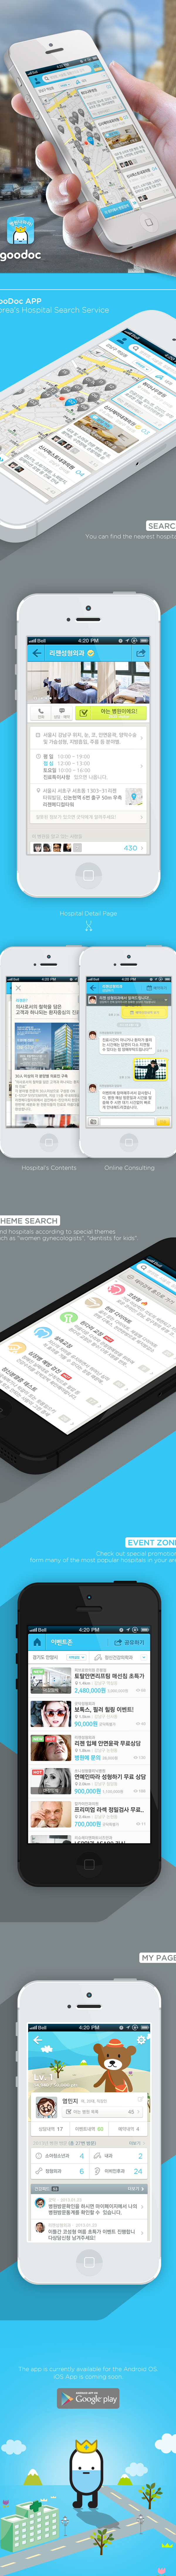 goodoc Korea Healthcare service hospital doctor ios app